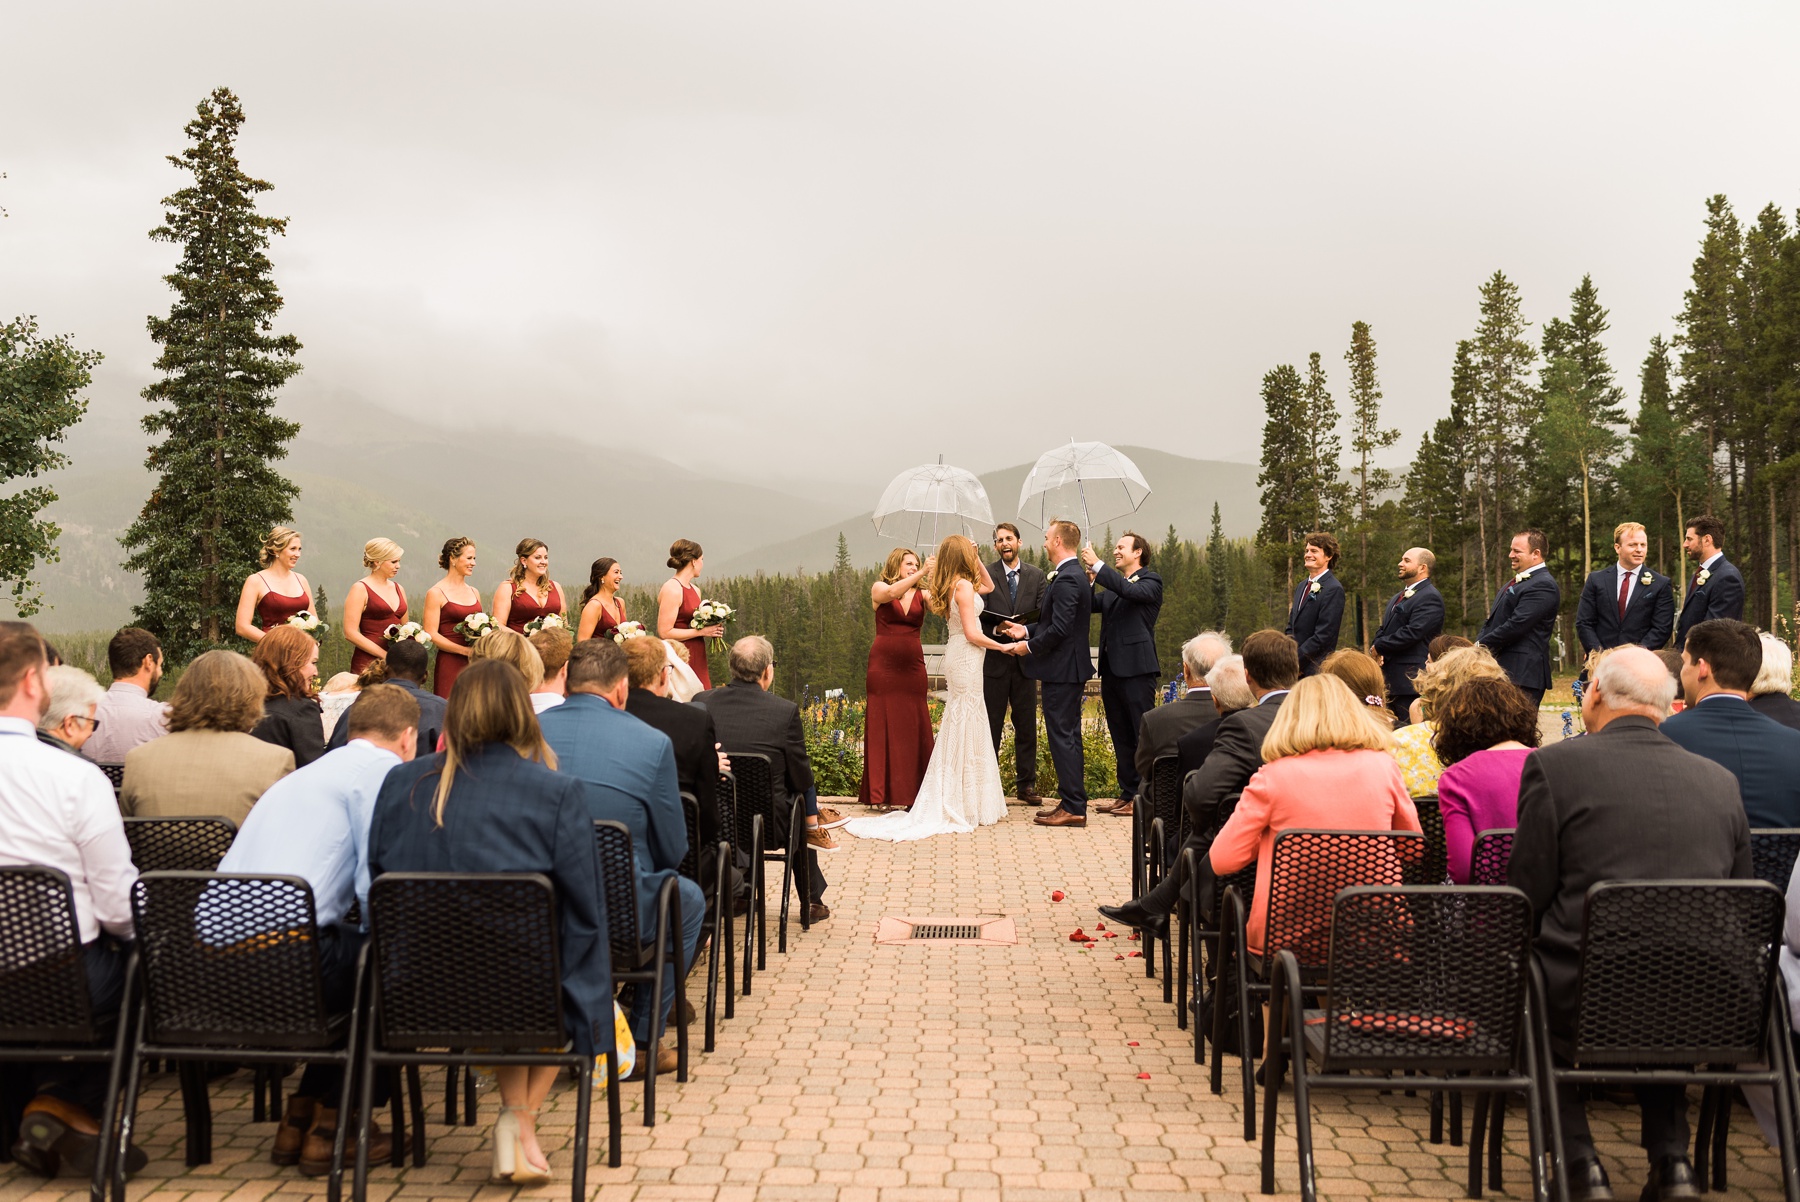 Wedding Ceremony At TenMile Station in Breckenridge